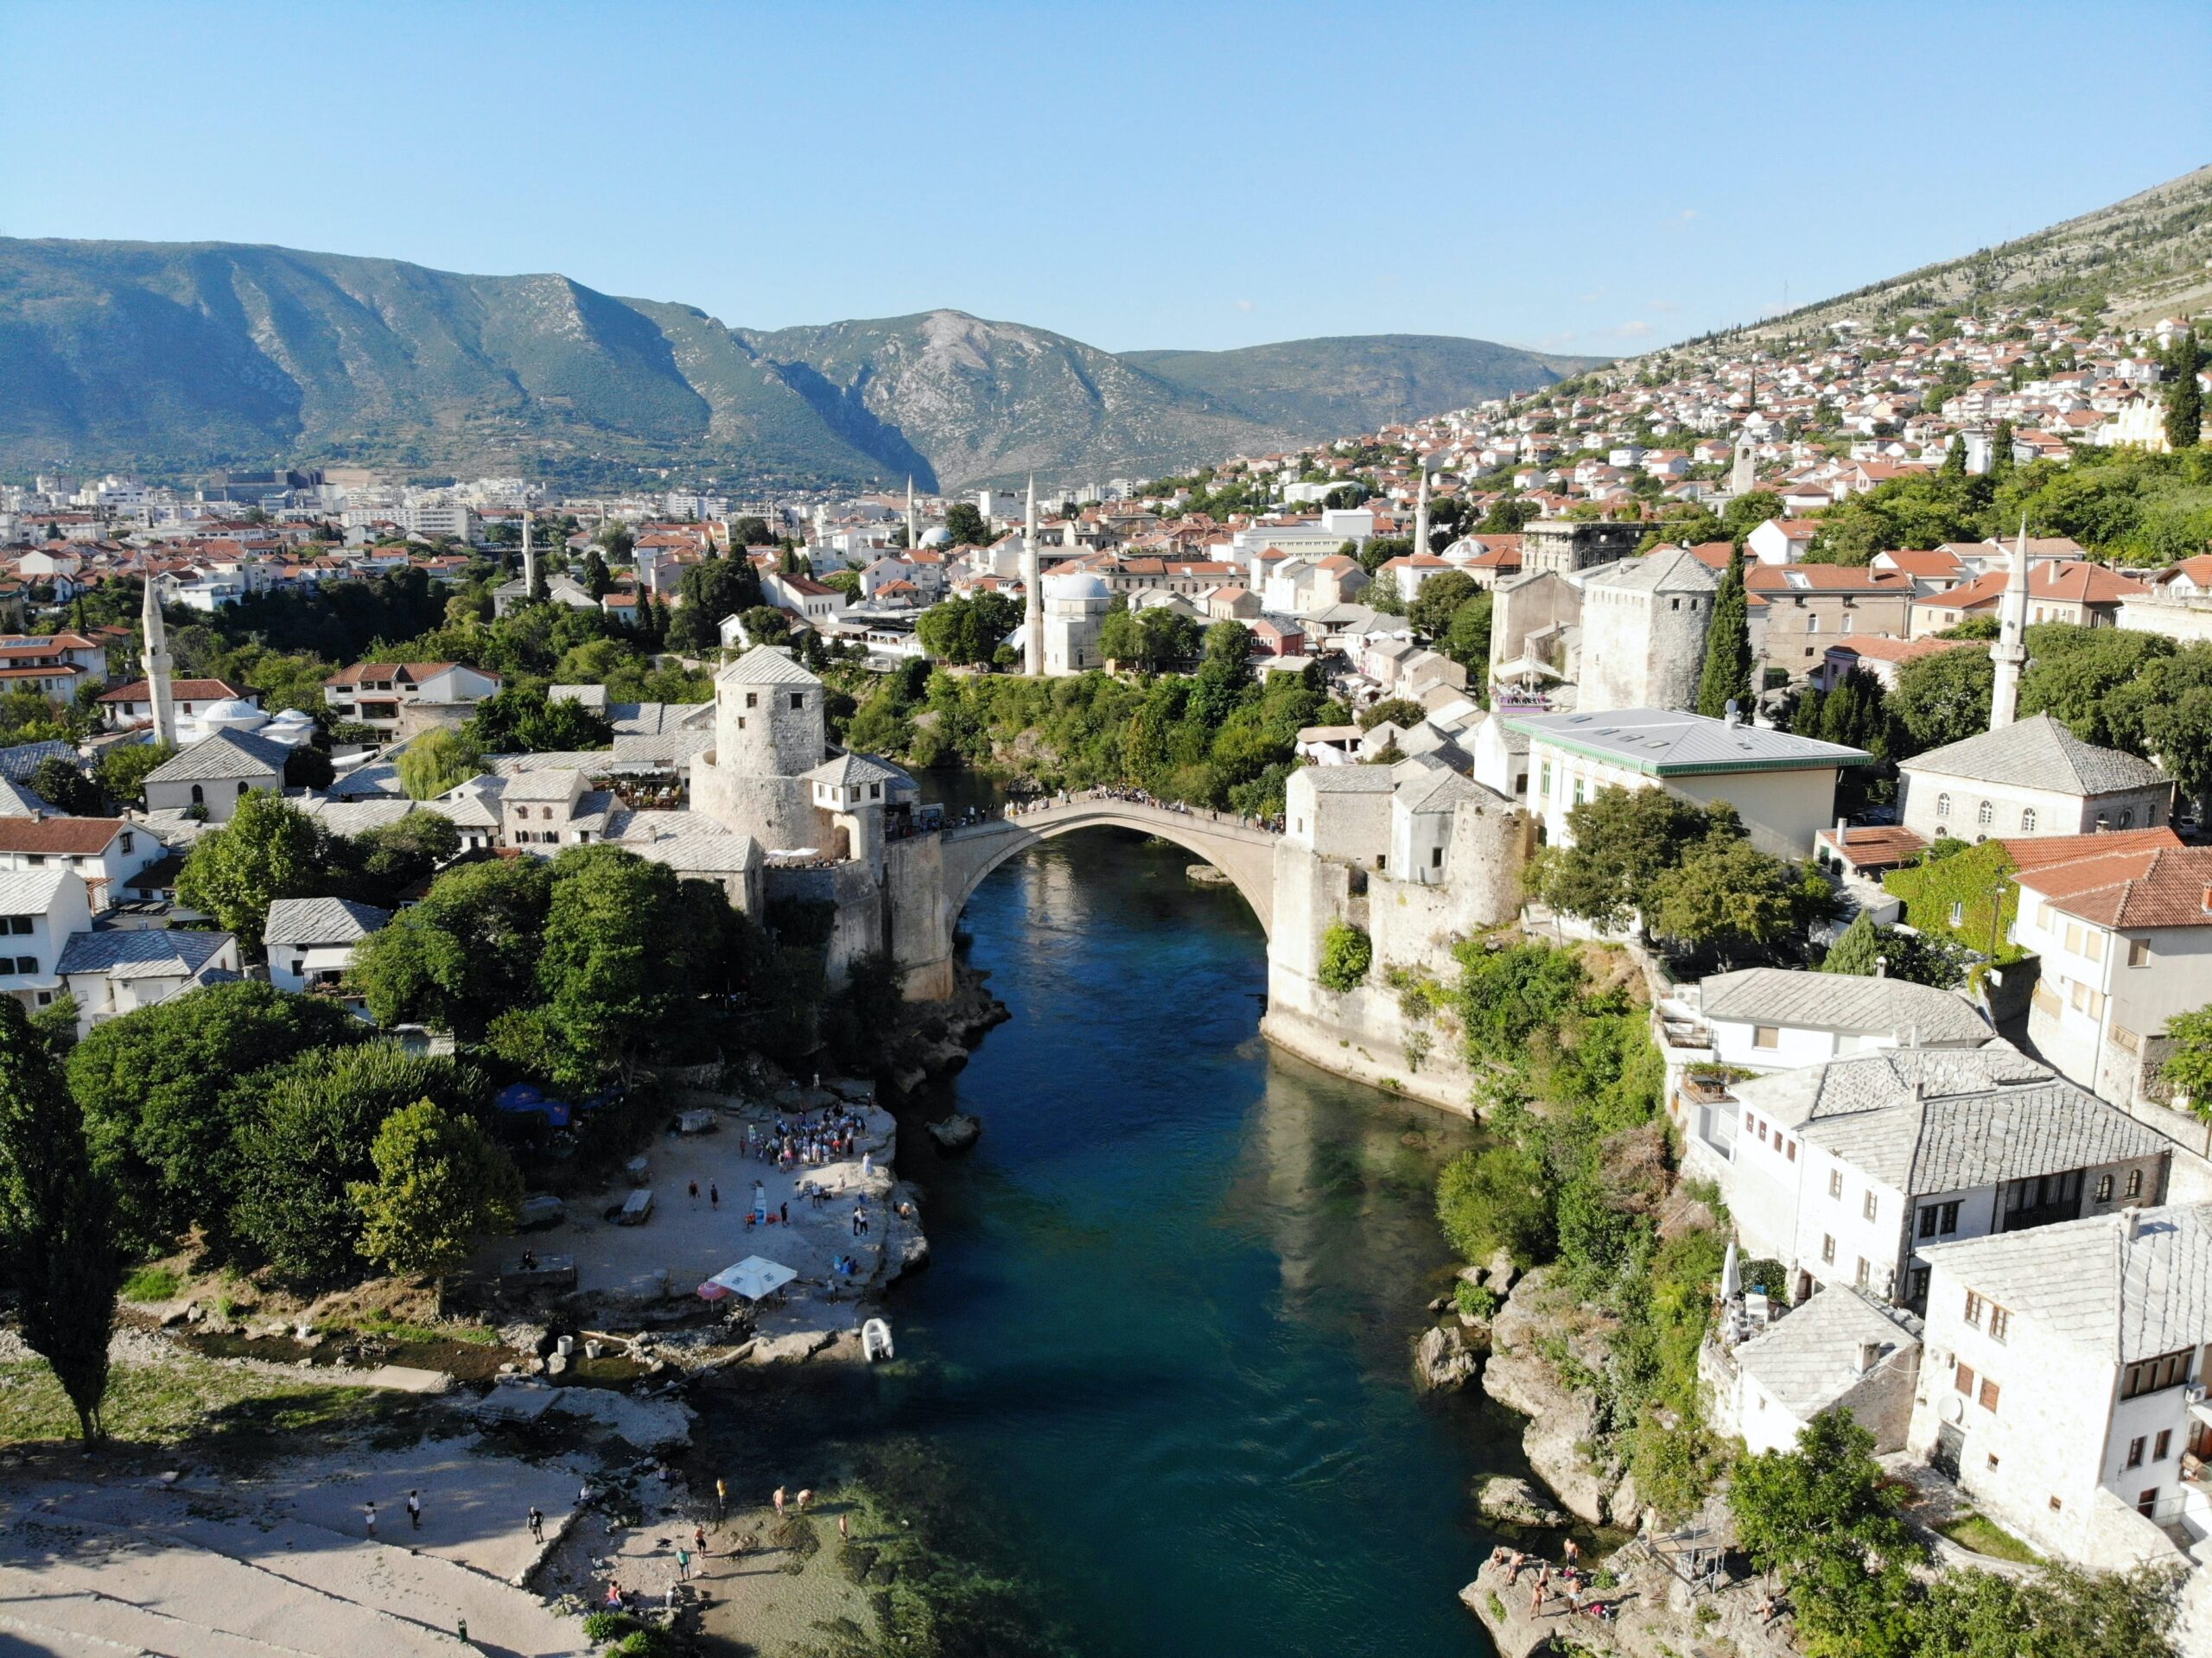 Beautiful townscape in Mostar, Bosnia and Herzegovina